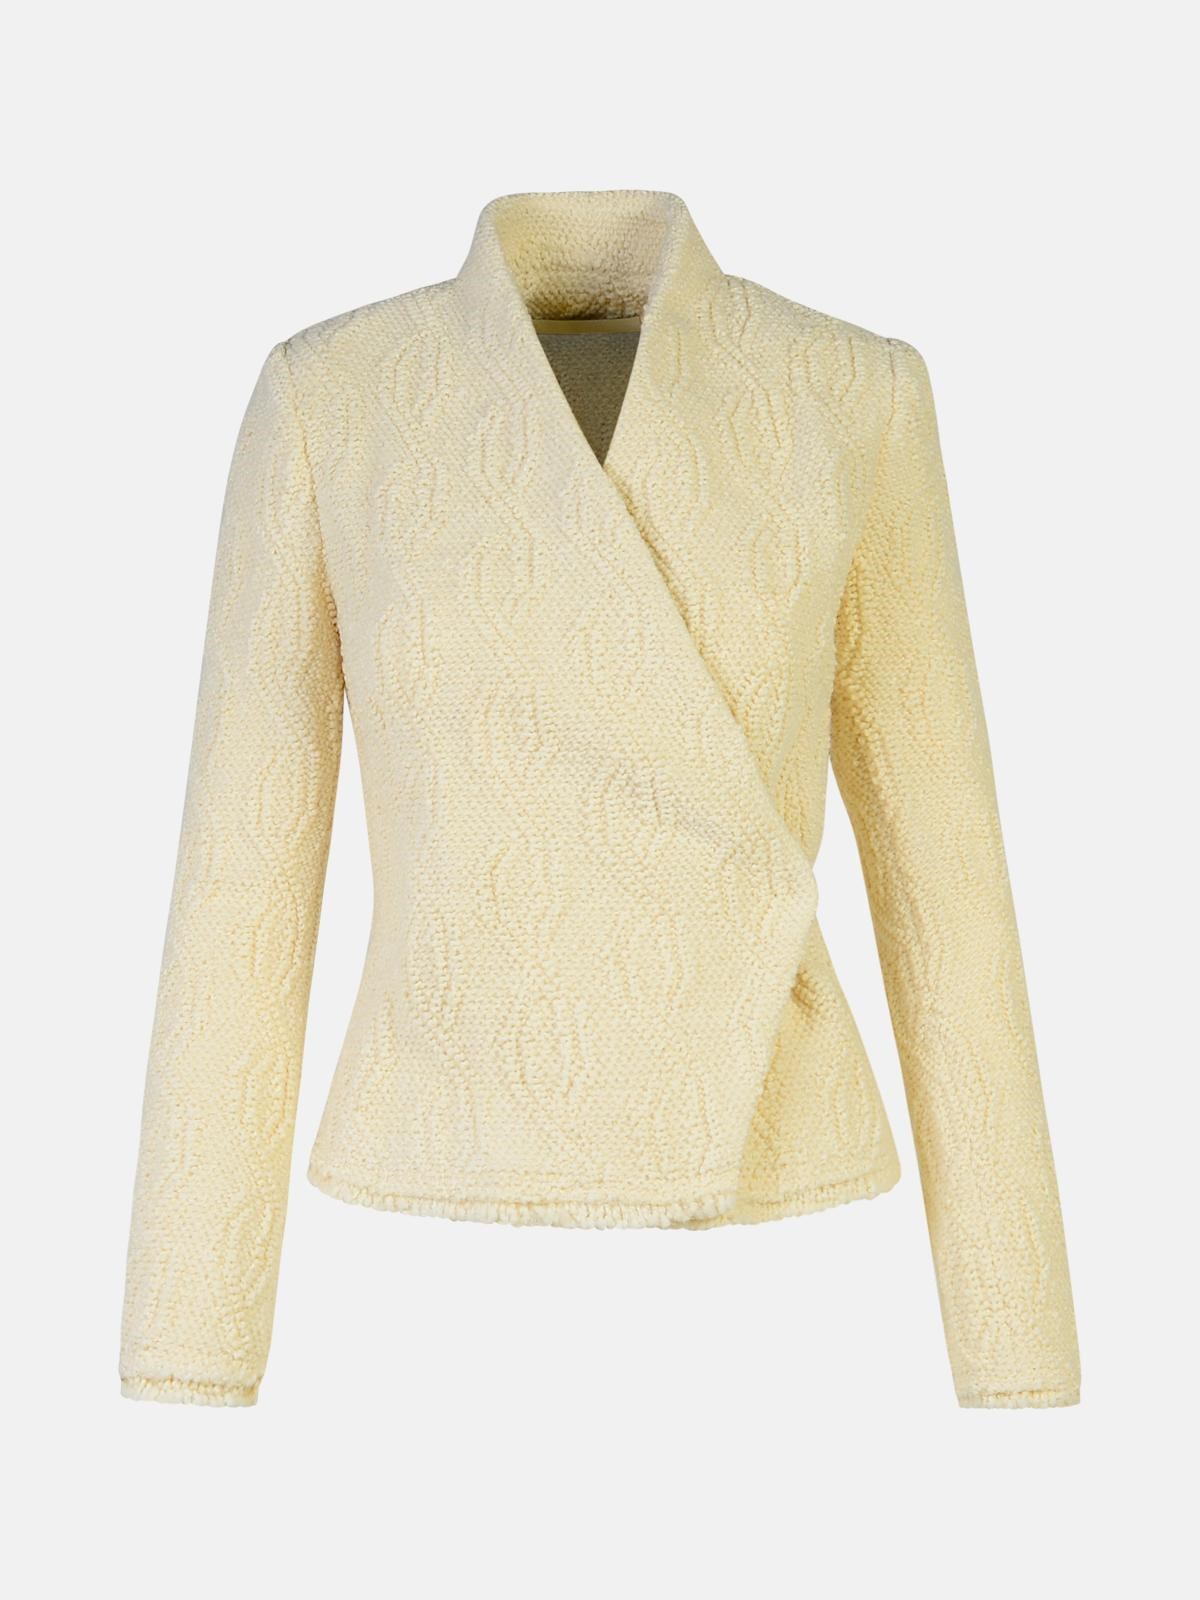 Isabel Marant 'loyana' Cream Wool Blend Jacket